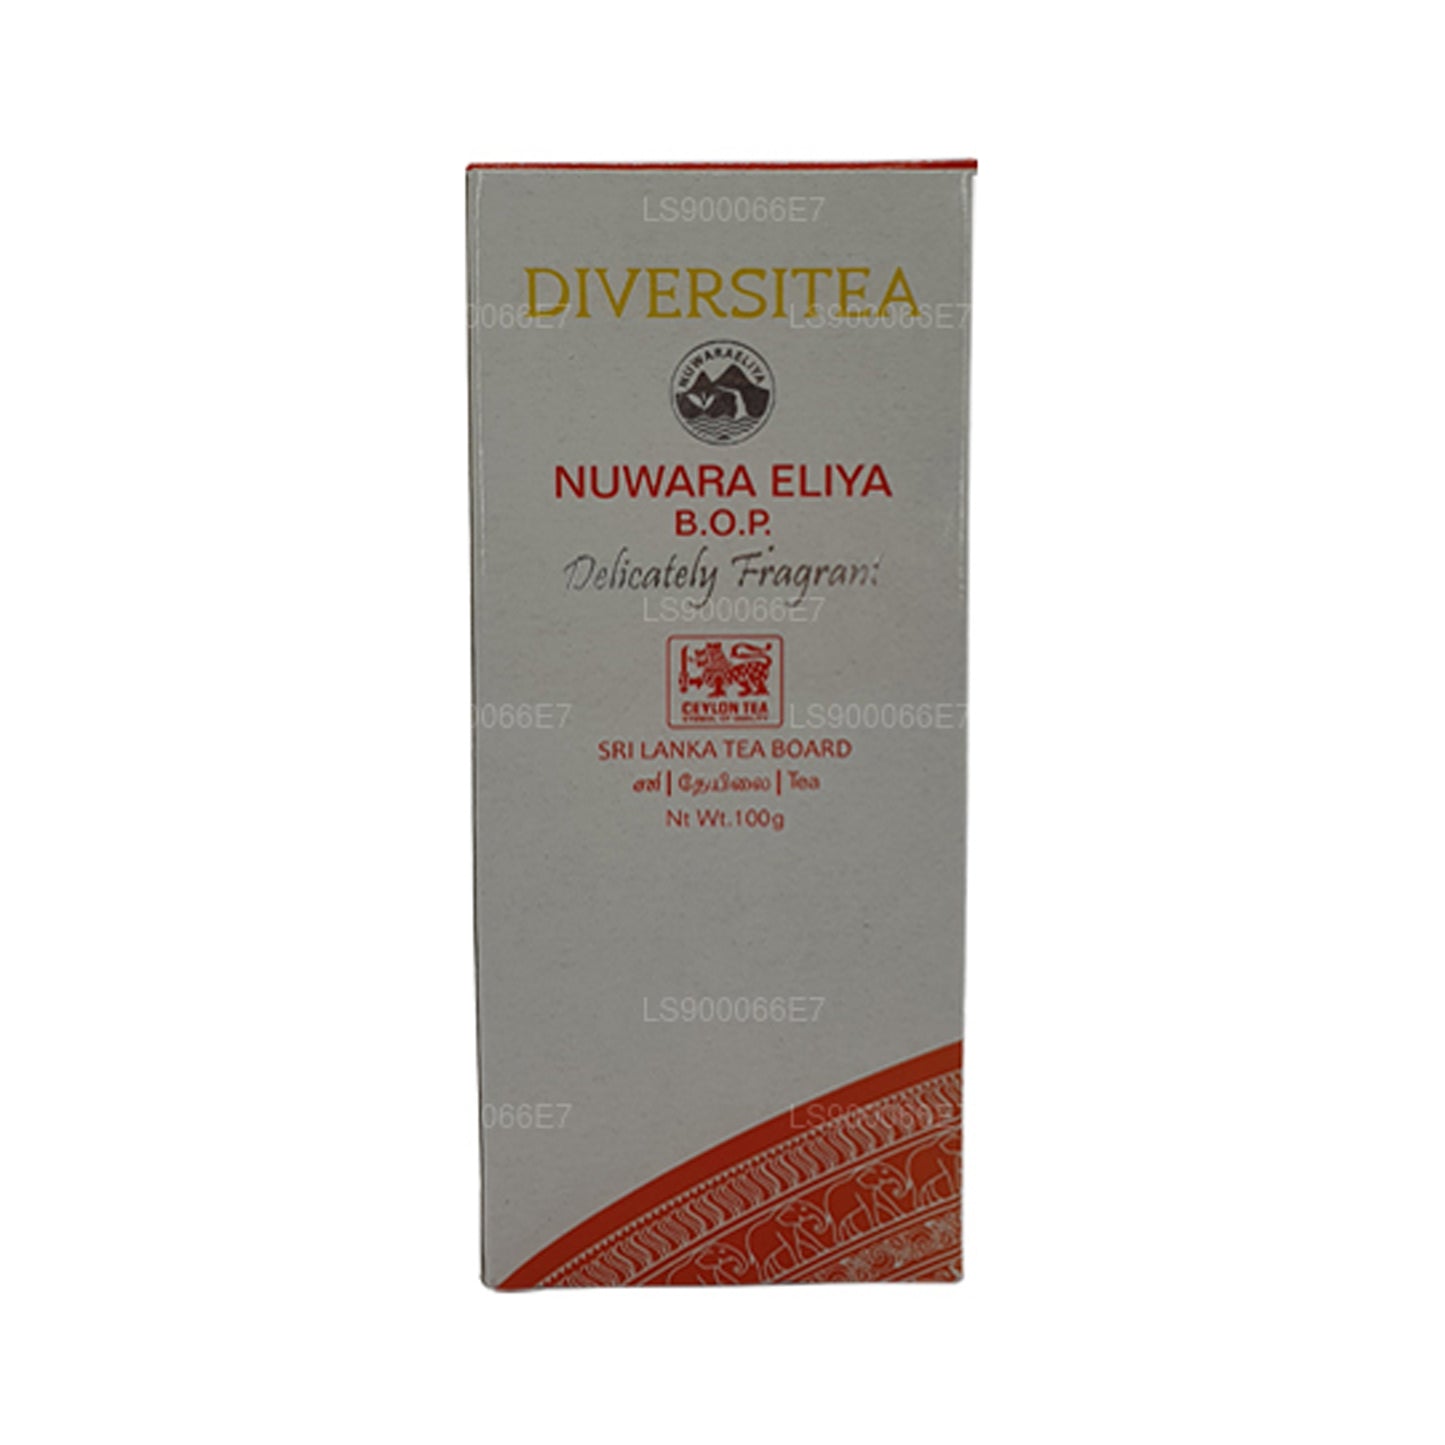 Lakpura 单产区努瓦拉埃利亚红茶